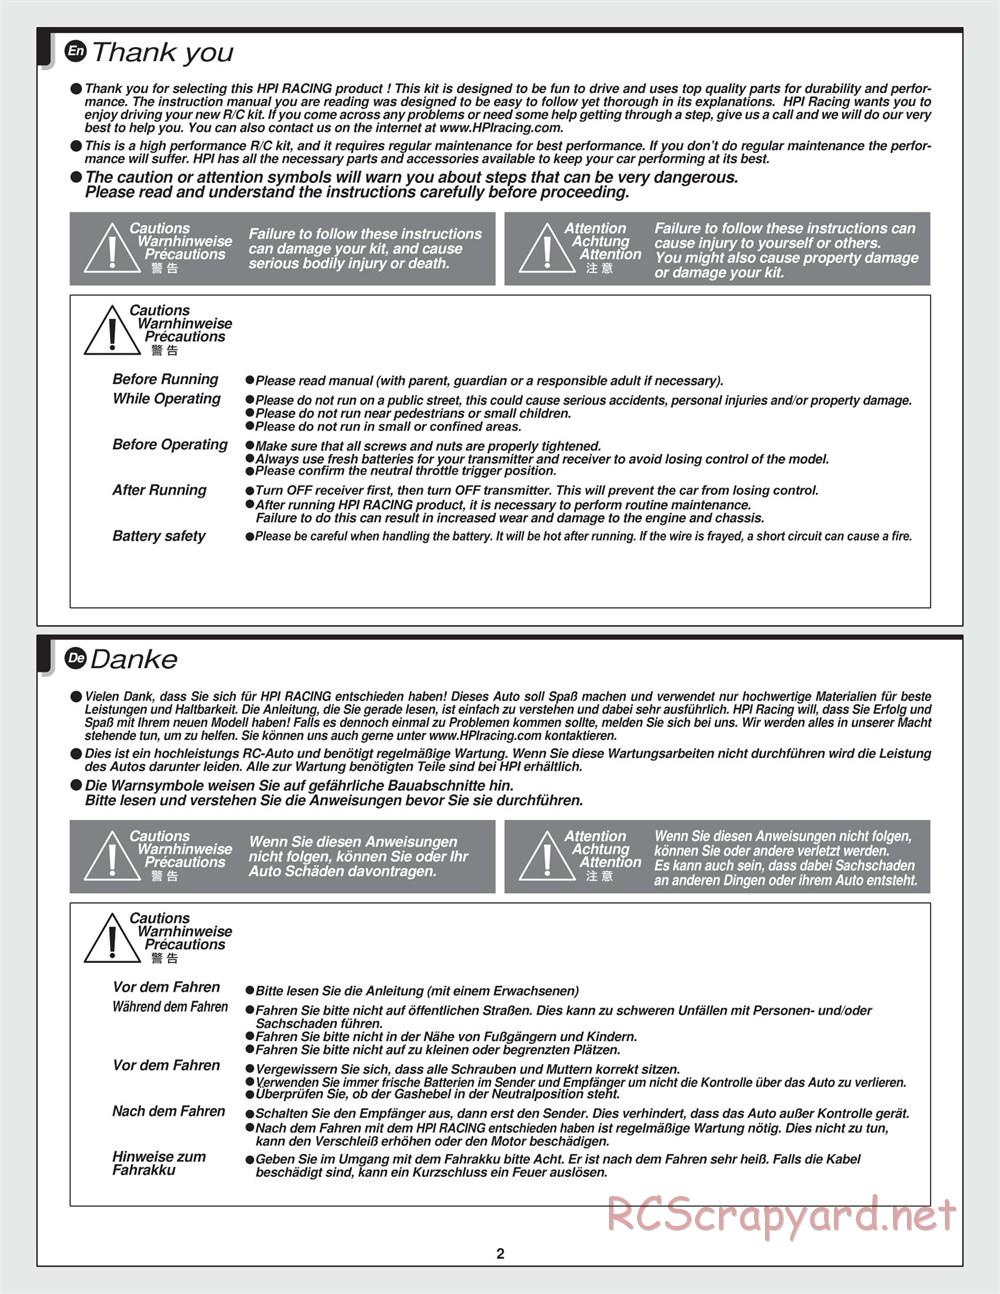 HPI - E10 Drift - Manual - Page 2